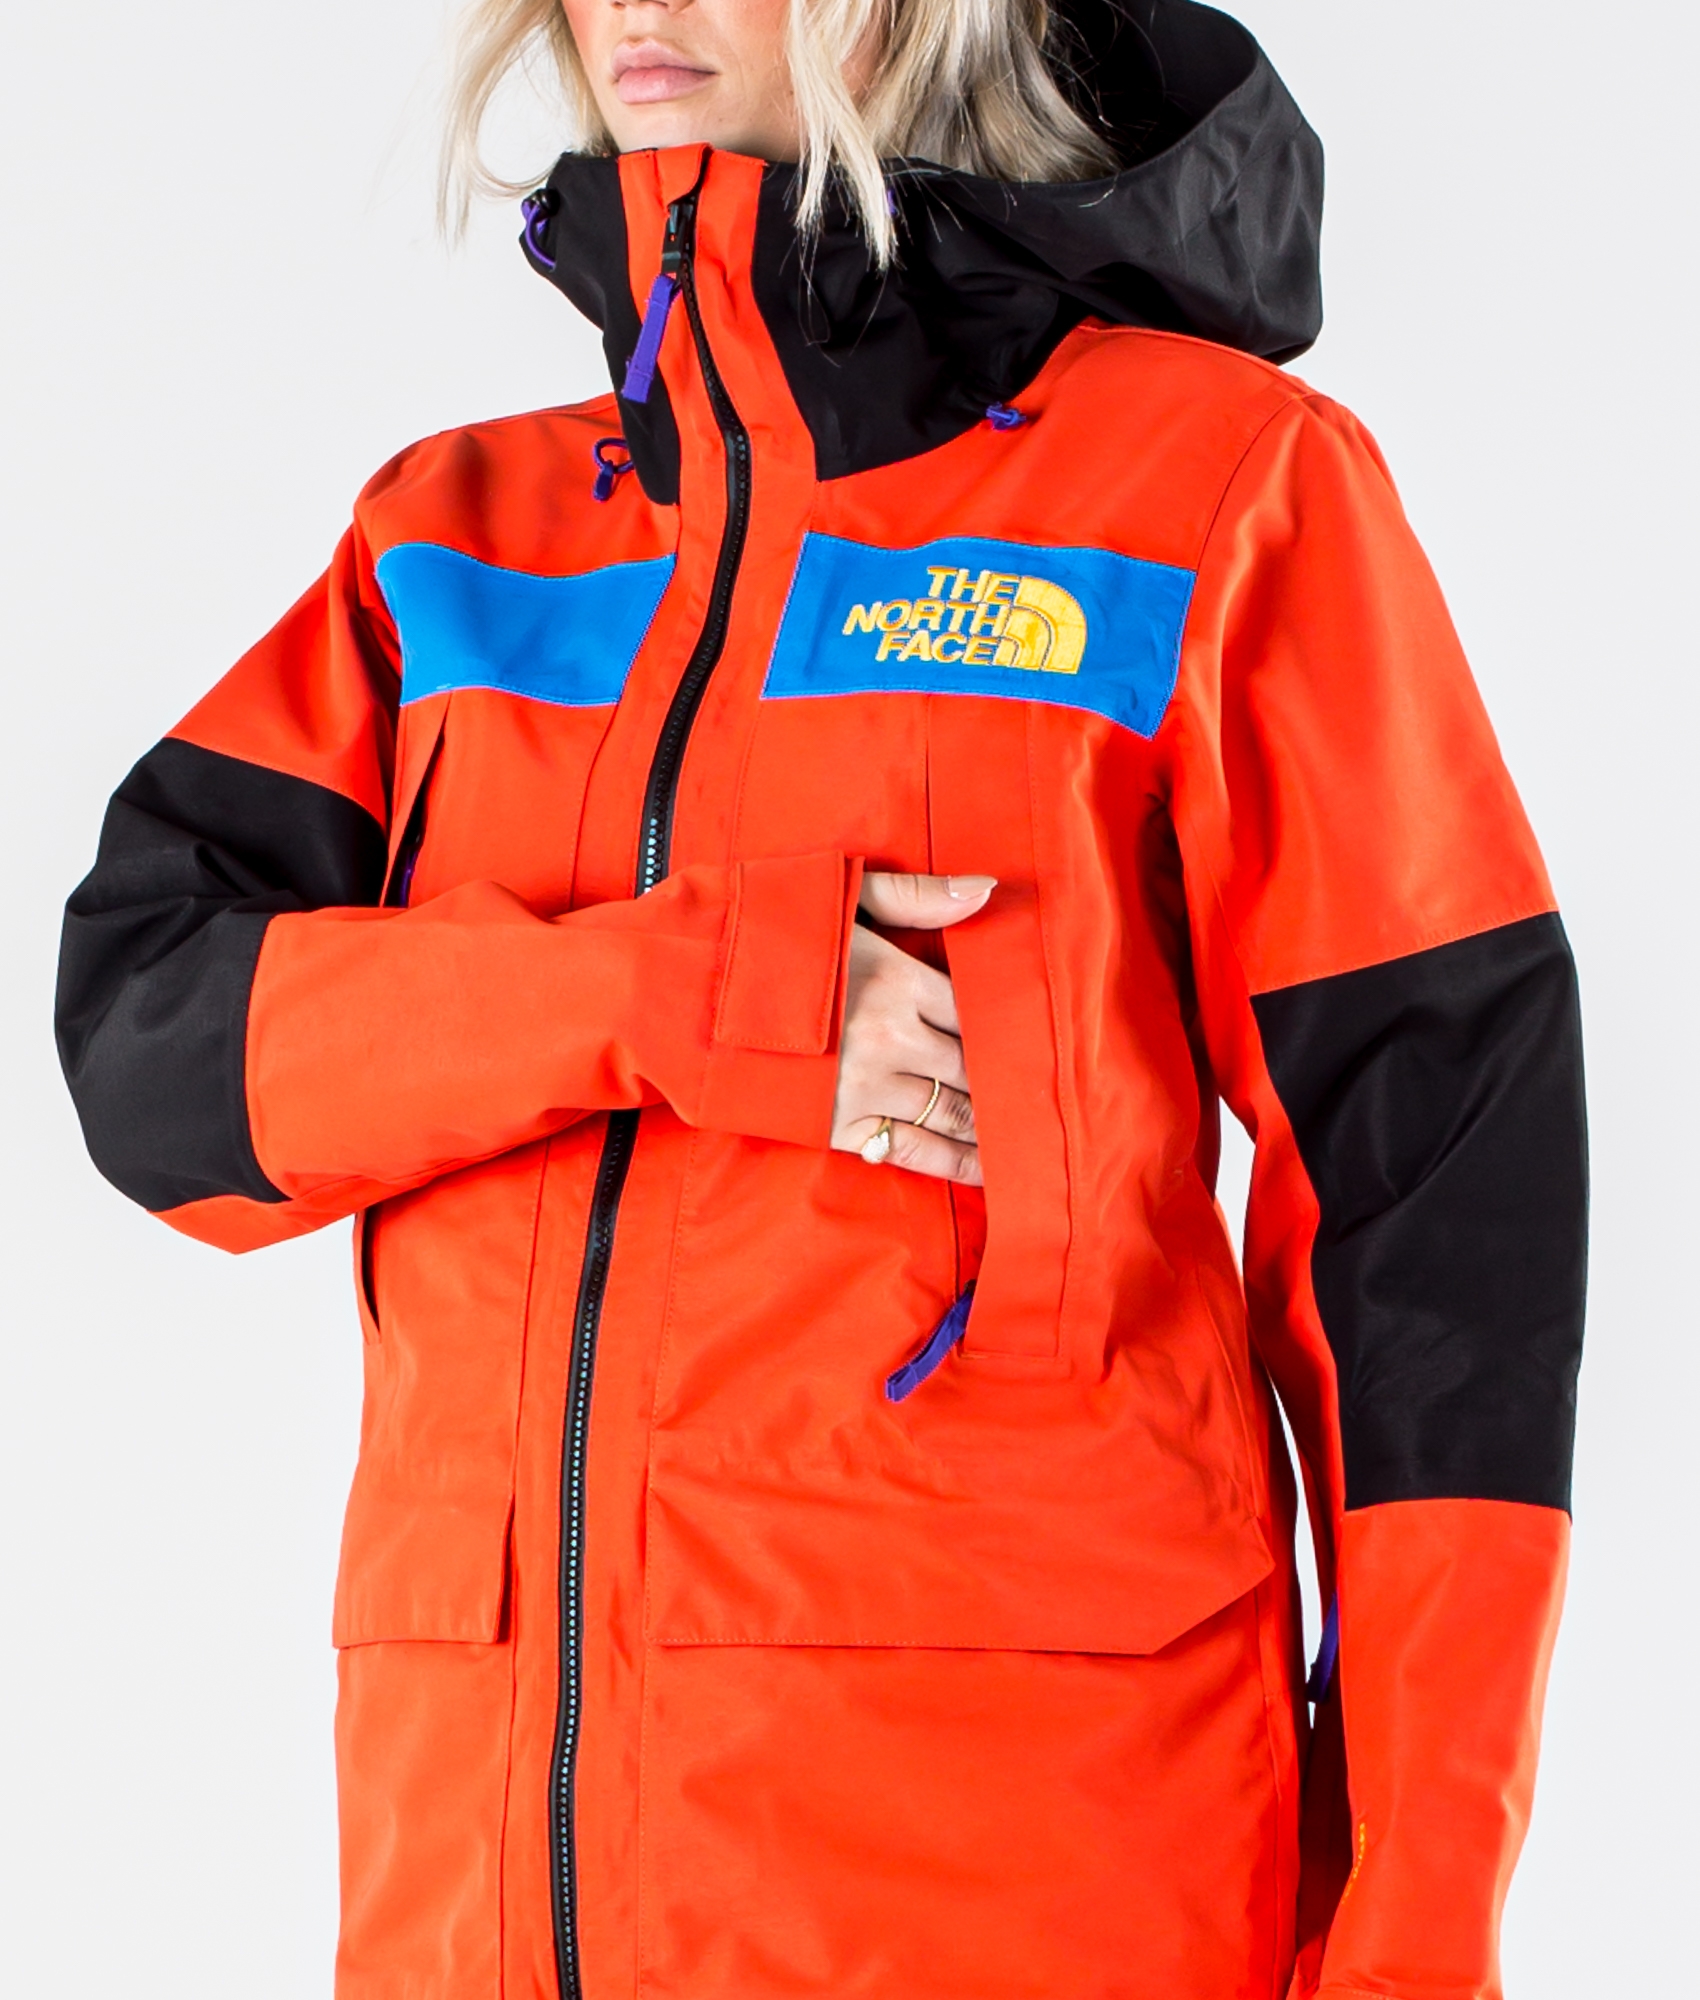 The North Face Team Kit Ski Jacket 